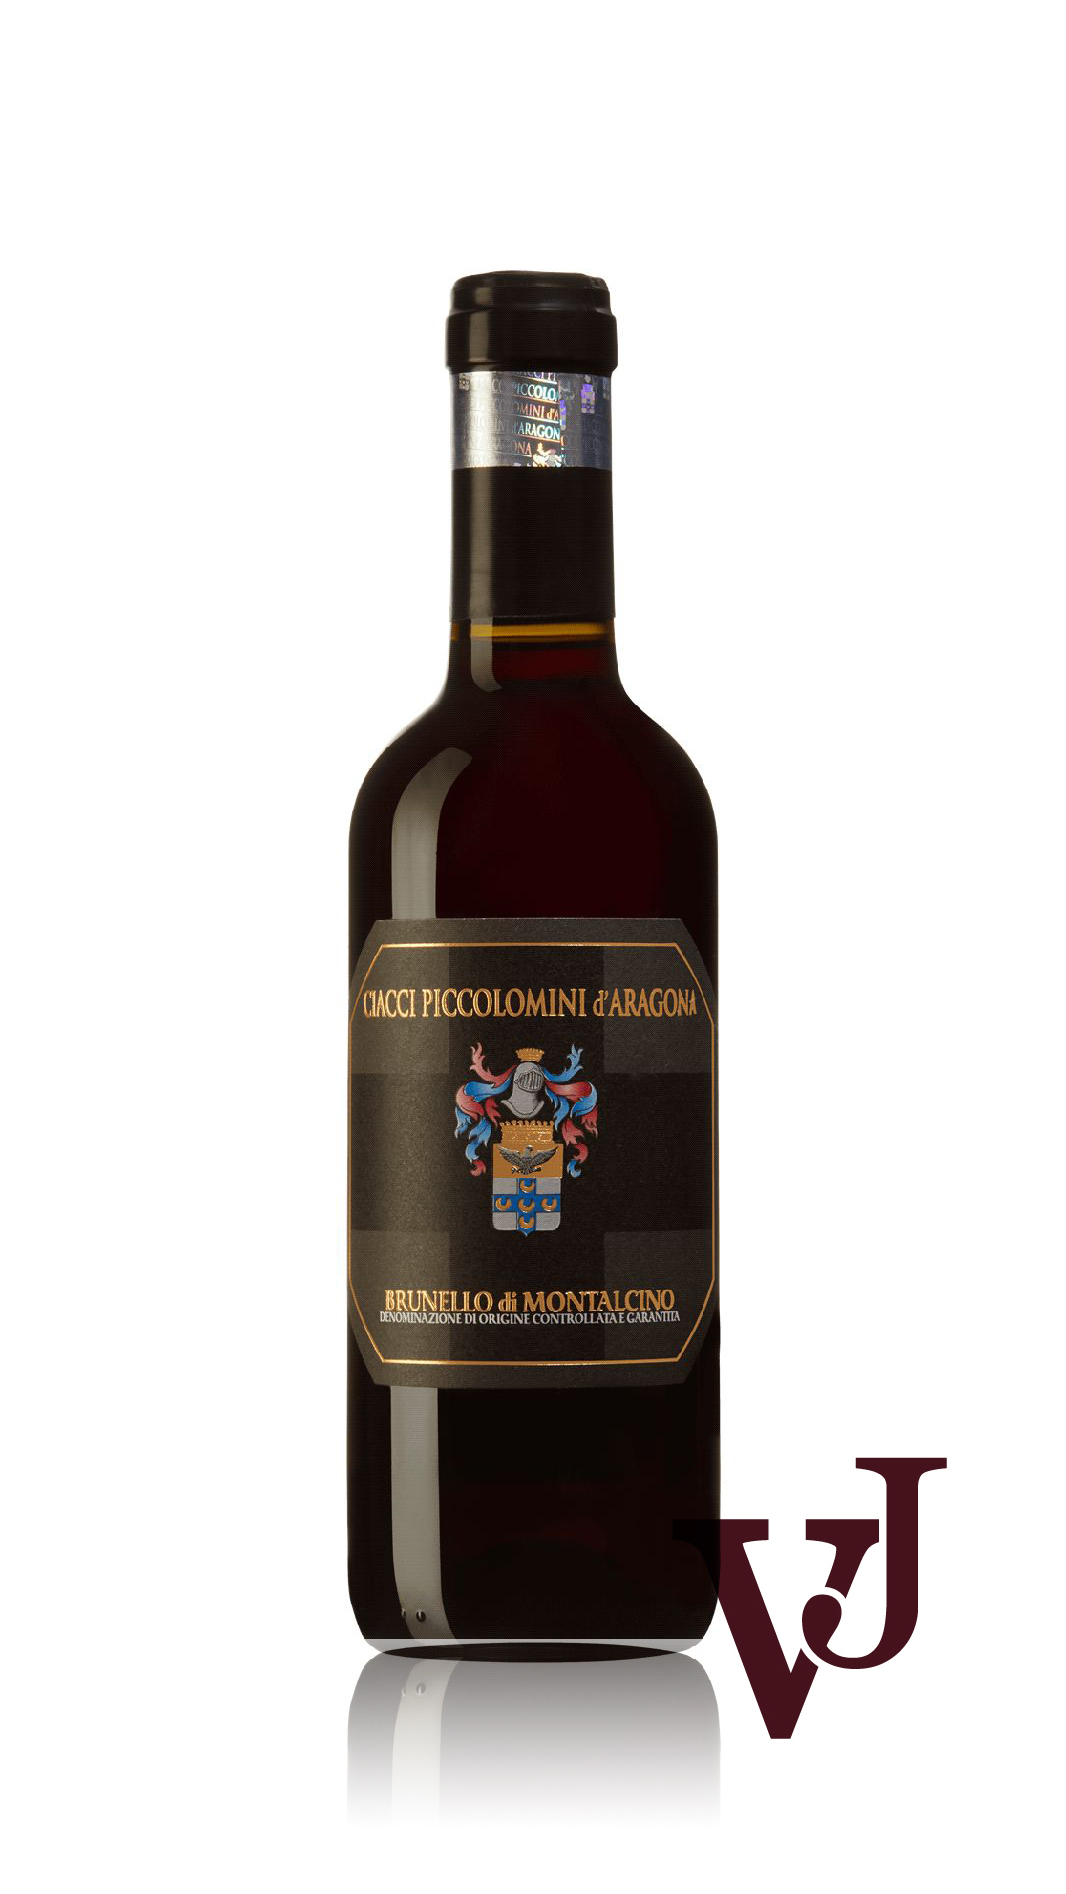 Vitt Vin - Brunello di Montalcino Ciacci Piccolomini 2019 artikel nummer 9394002 från producenten Ciacci Piccolomini från området Italien